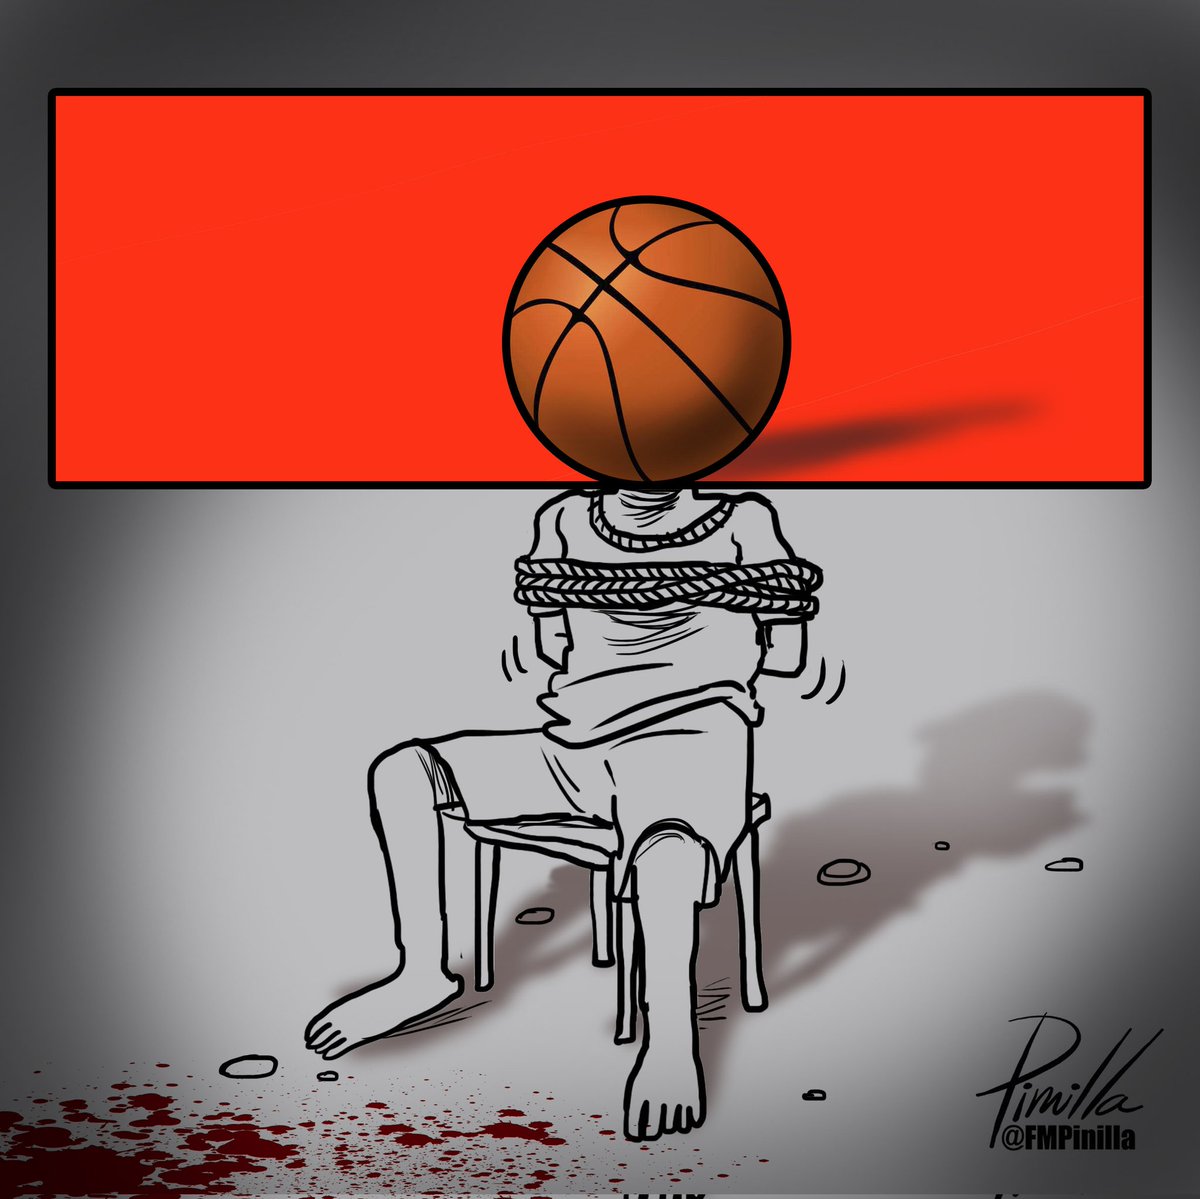 Tortura basquetbolera...
•
#caricatura para @elnacionalweb
•
#caricatura #cartoon #Venezuela #venezolanos #politicalcartoon